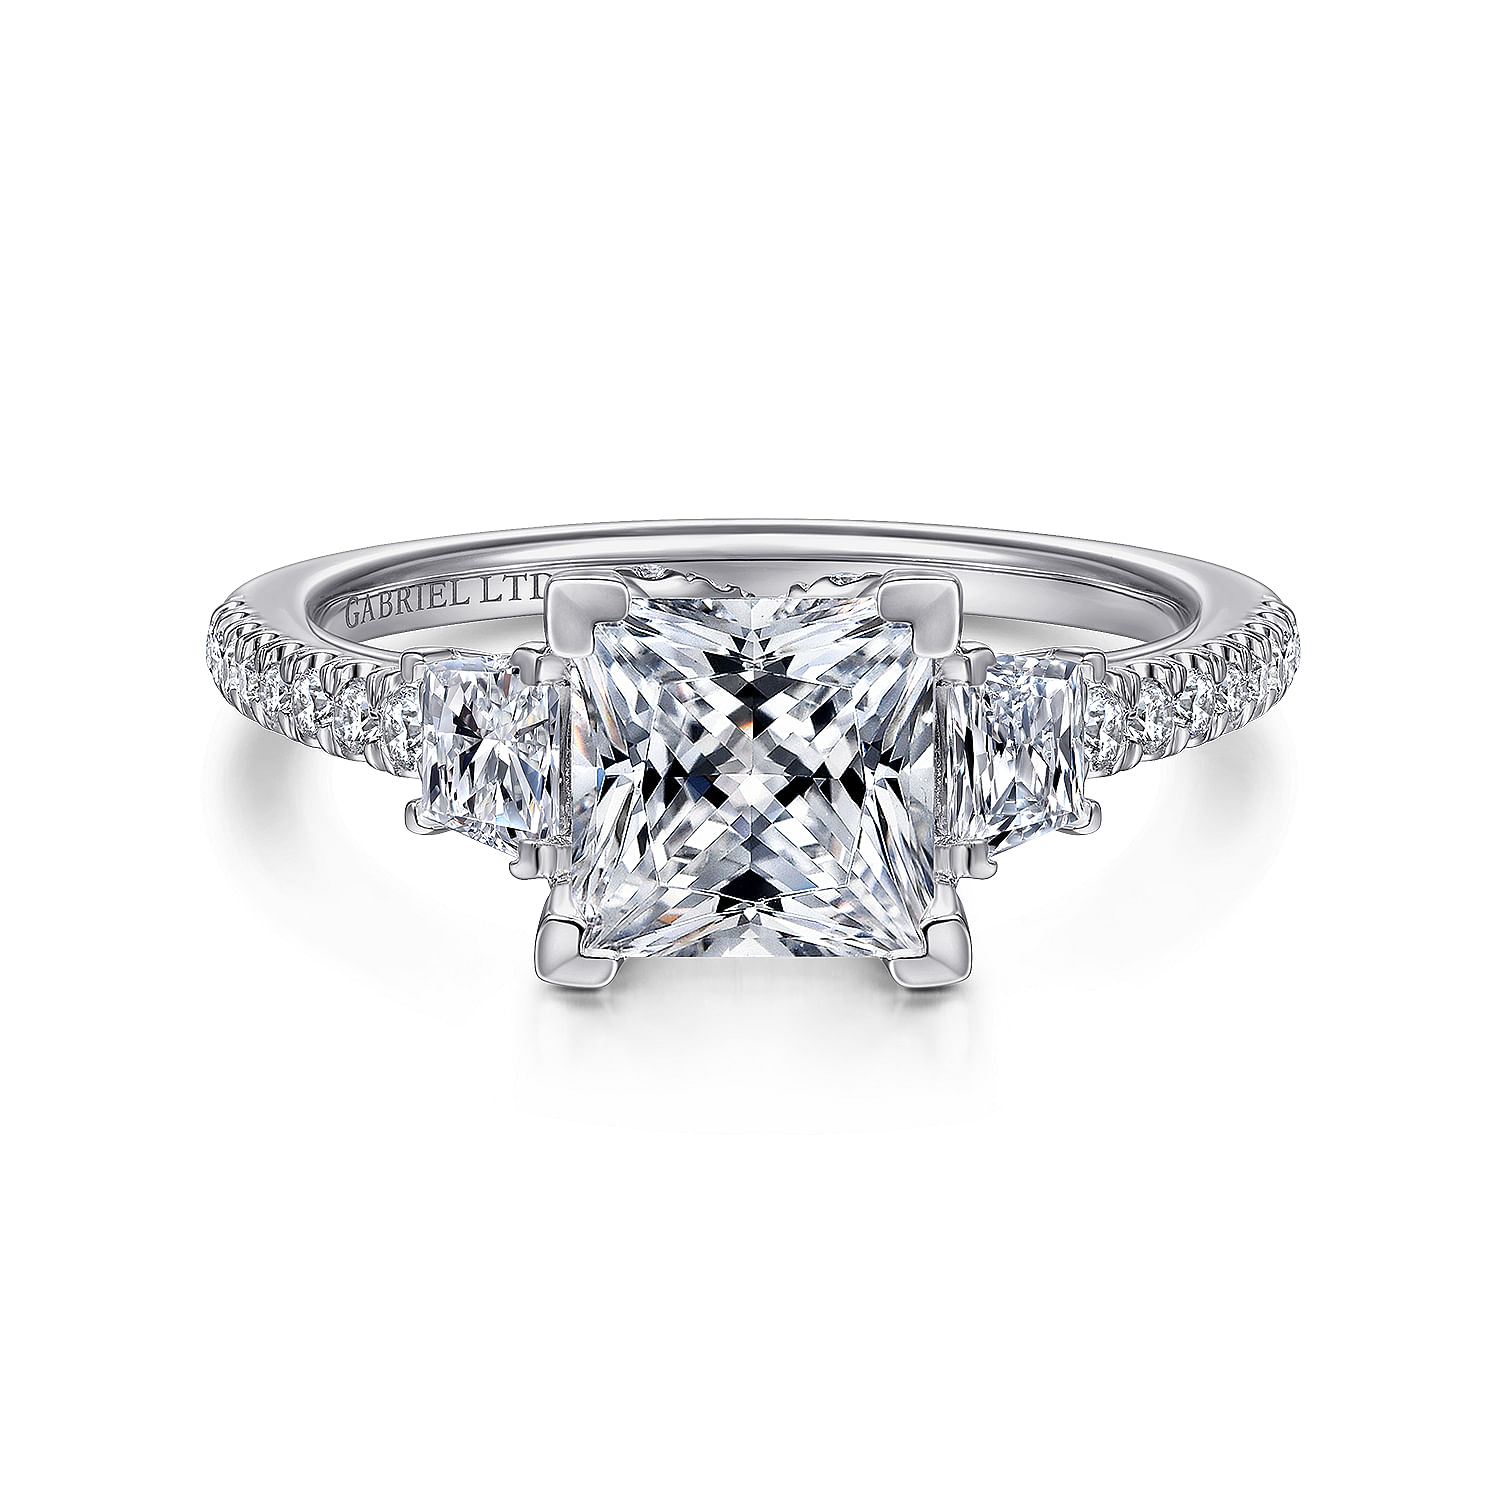 Quentin - 18K White Gold Princess Cut Three Stone Diamond Engagement Ring